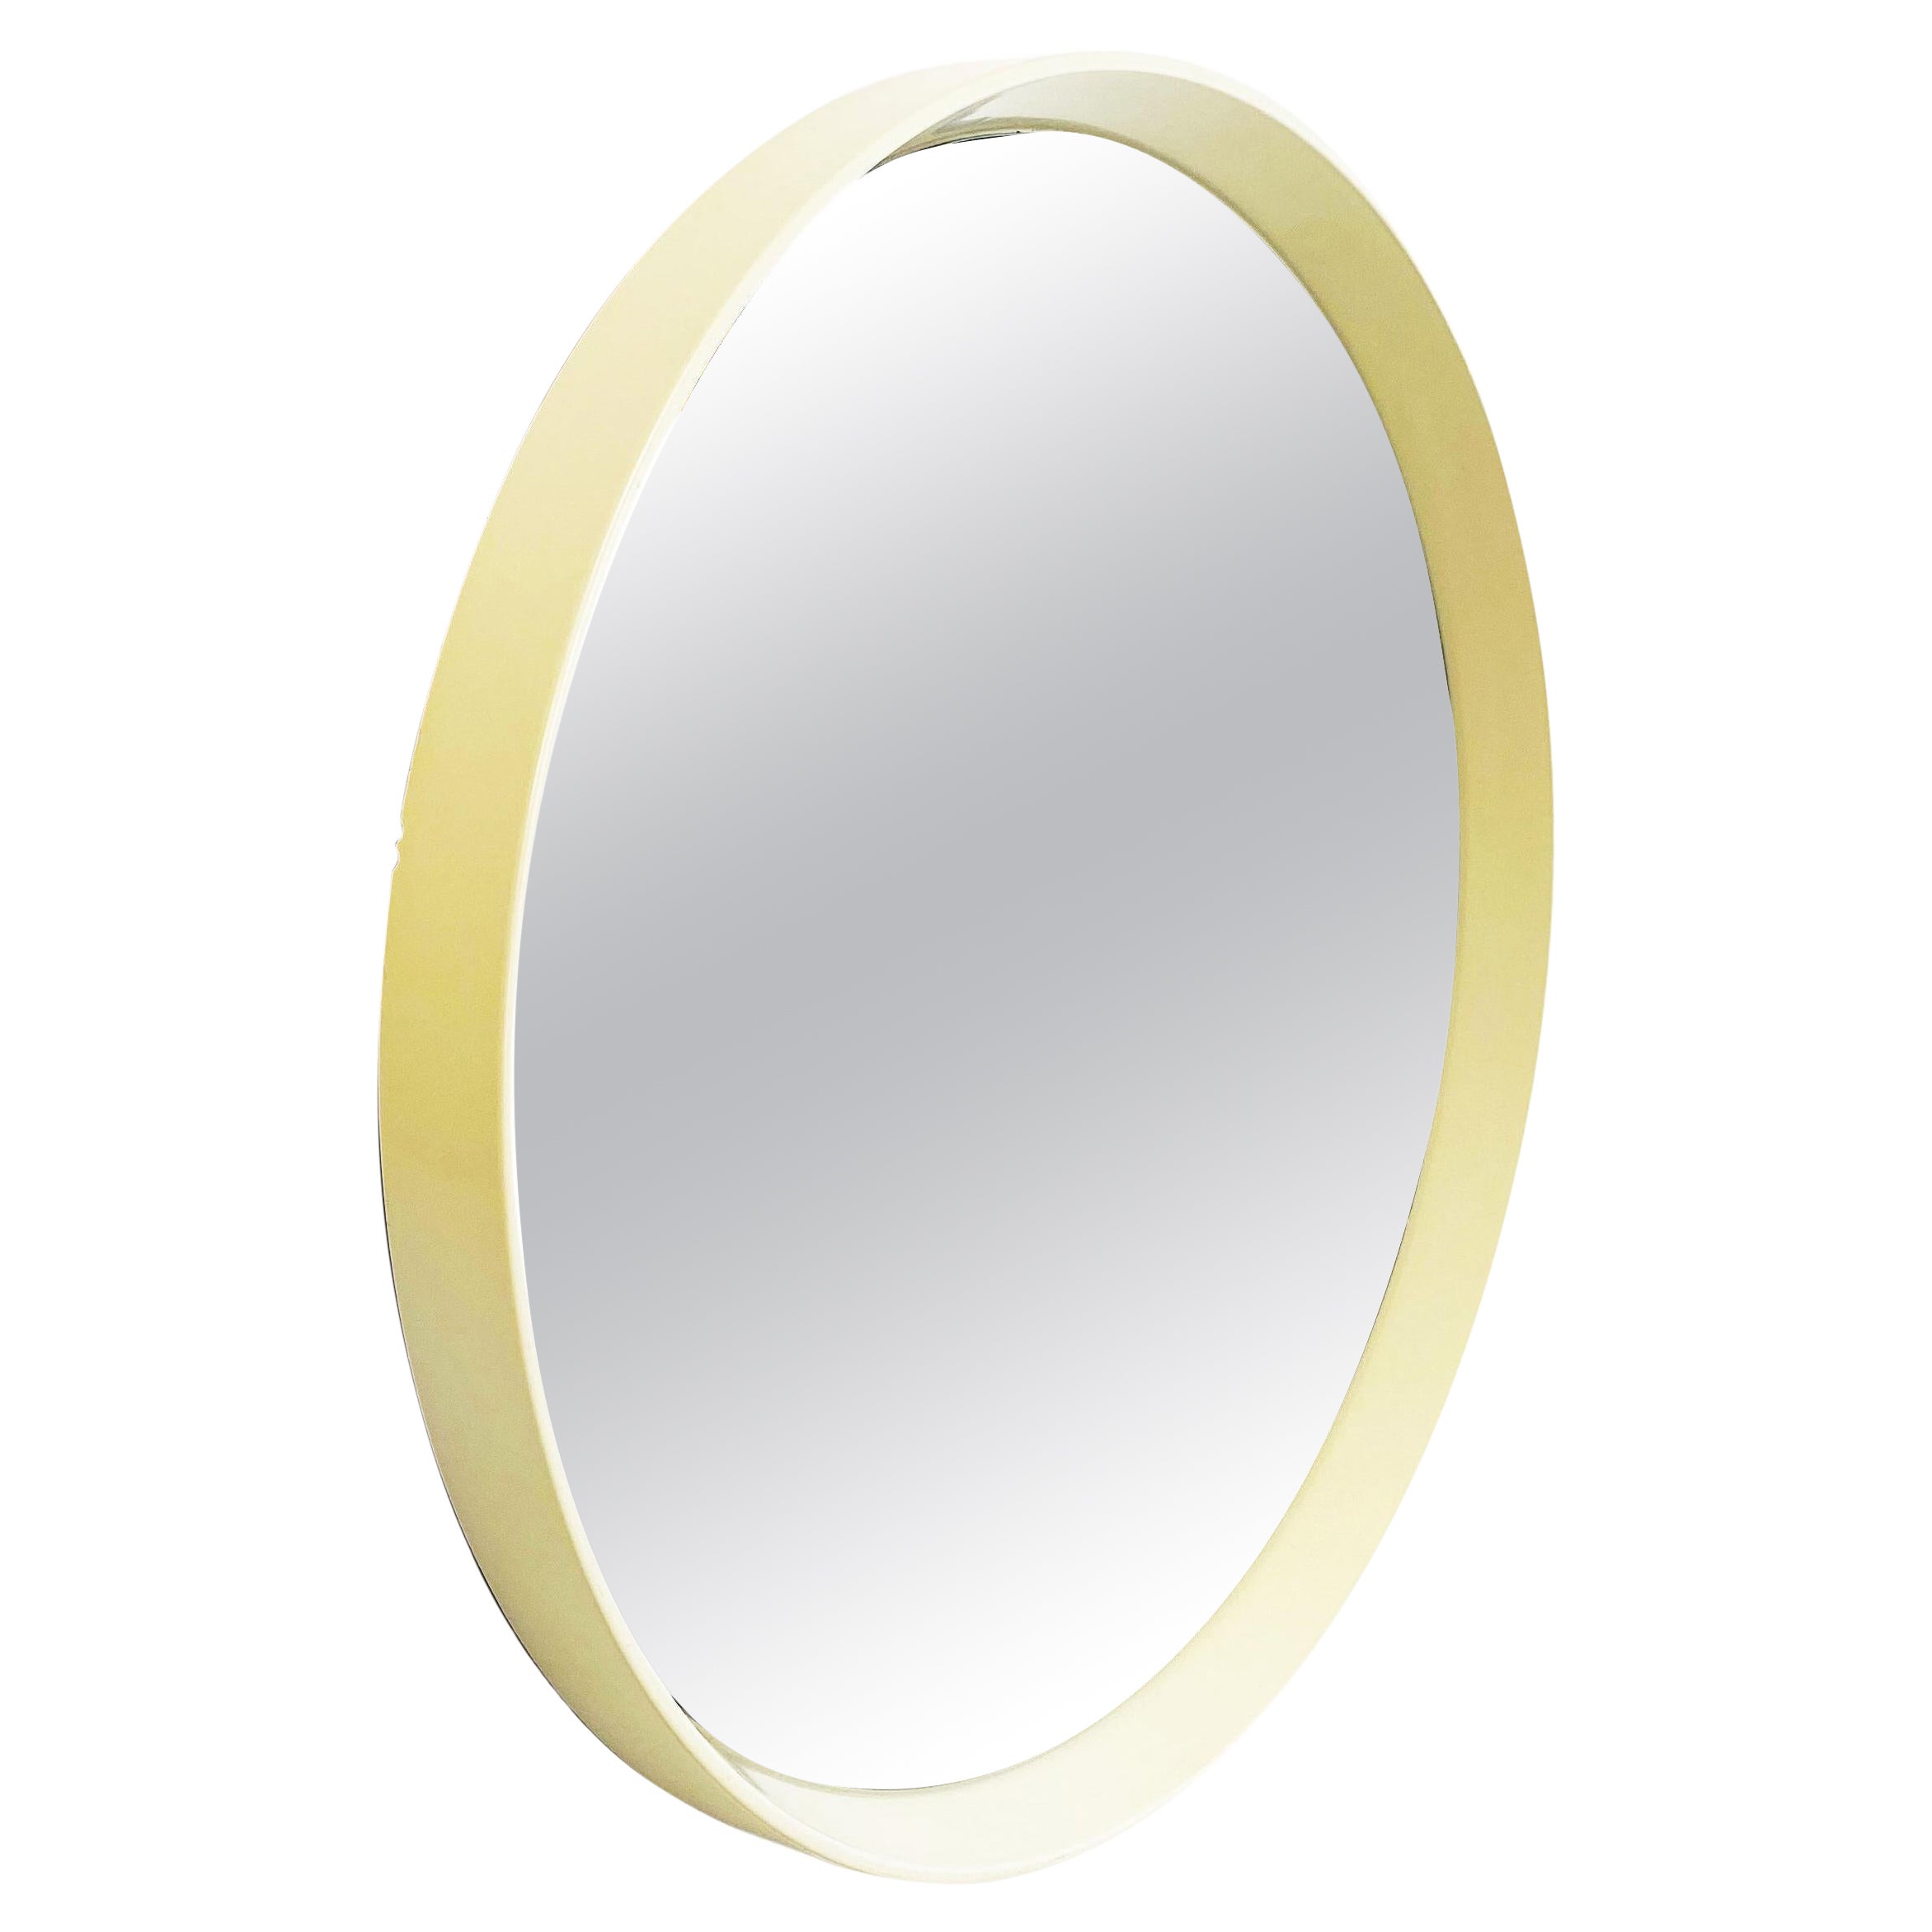 Italian Mid-Century Modern Round White Plastic Mirror, 1980s For Sale